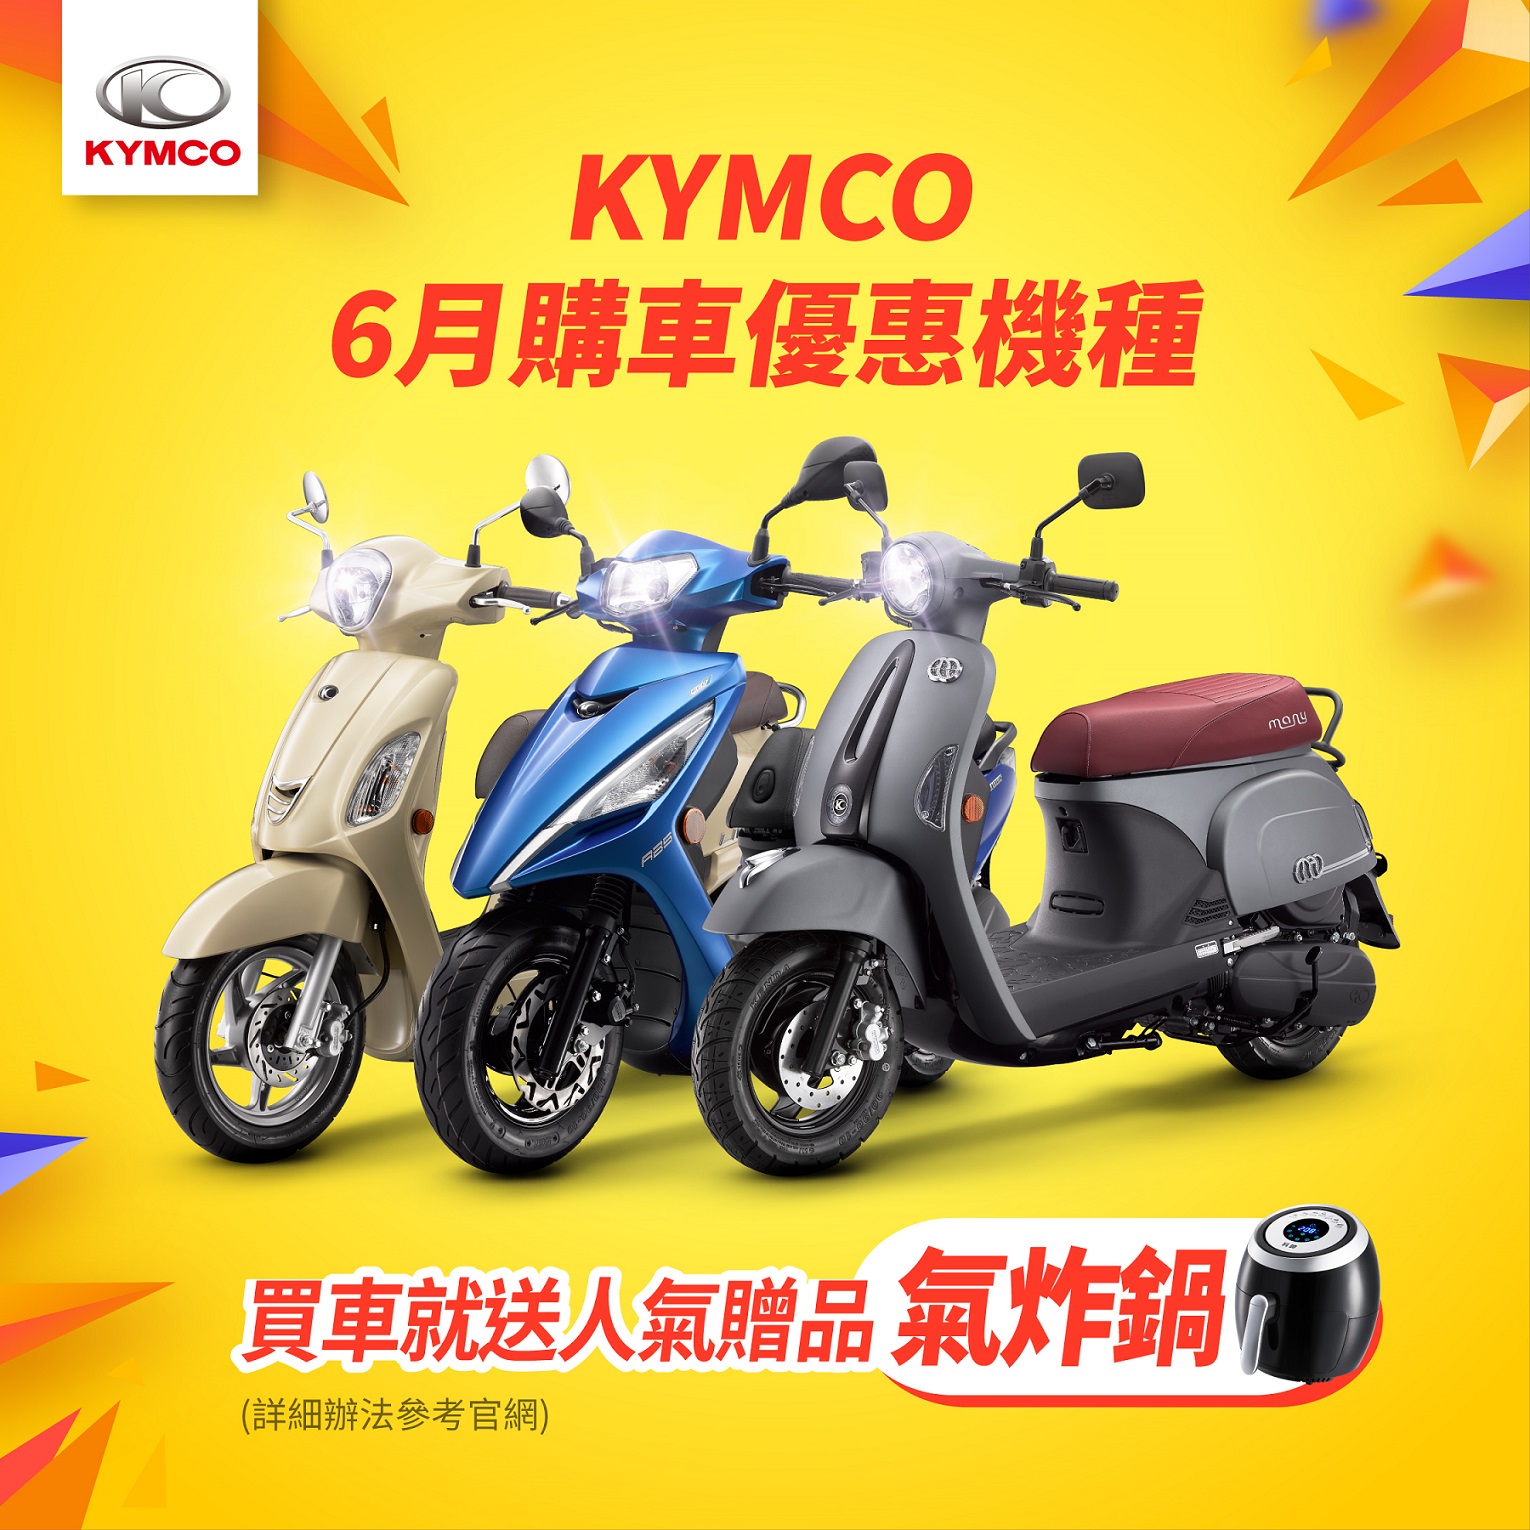 Kymco5.jpg